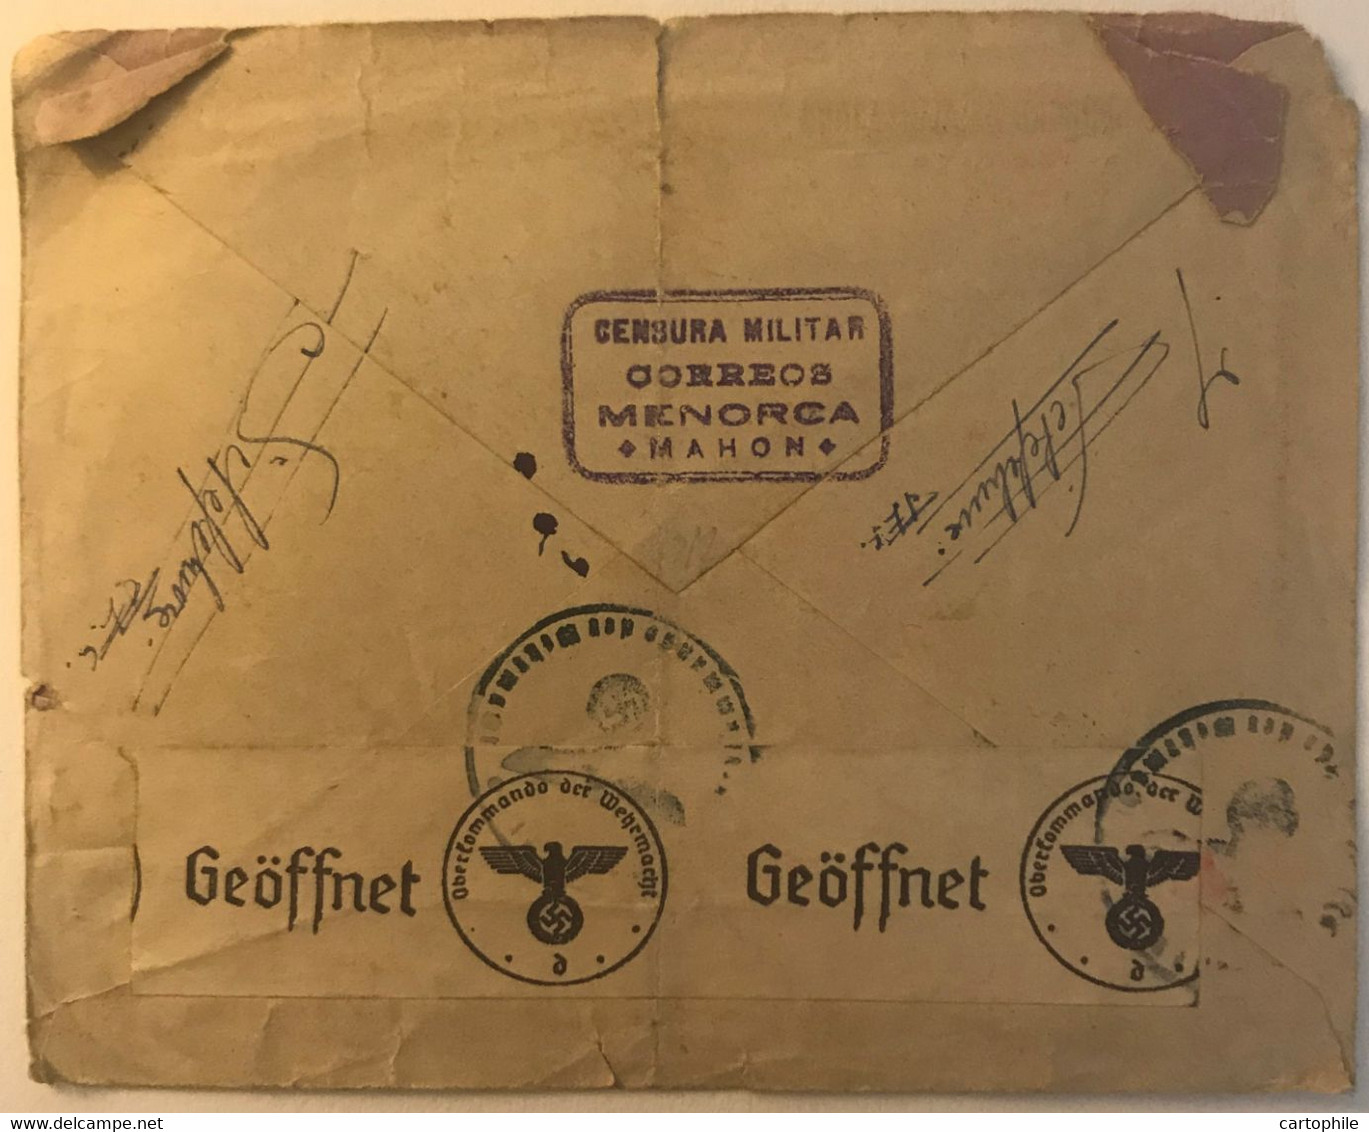 Rare Letter From Mahon To Paris (zone Occupée) With Doble Censura Militar Correos Menorca & Wehrmacht Germany 1943 WW2 - Marcas De Censura Nacional